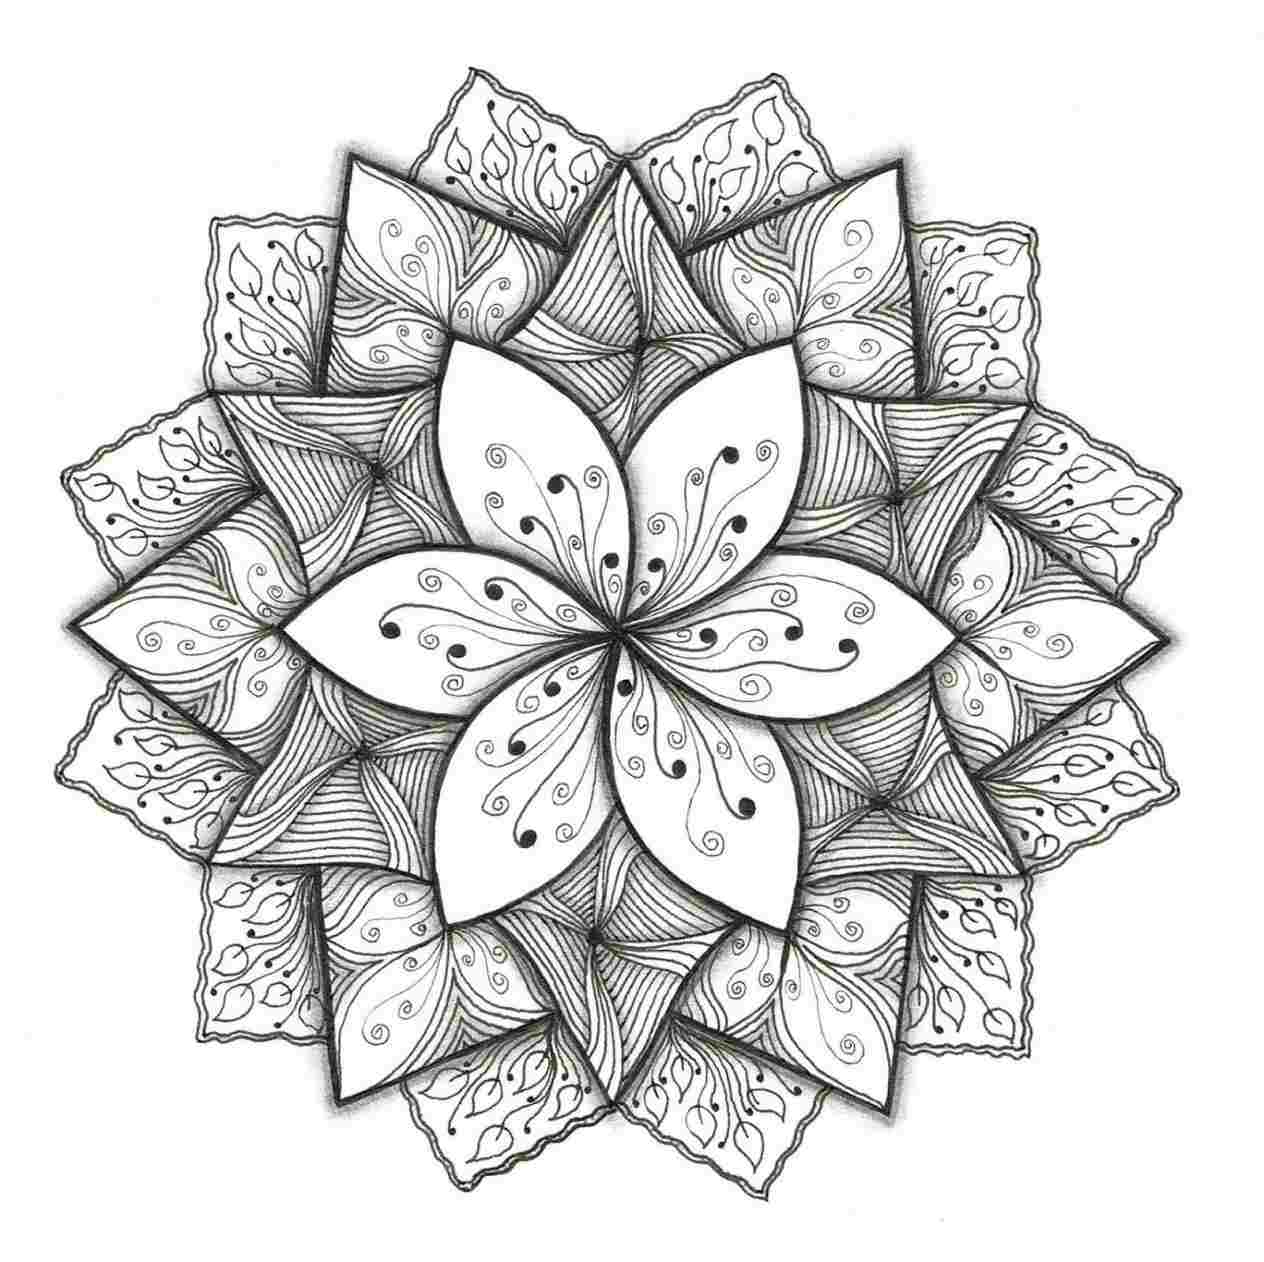 How to draw a Mandala | 75 Simple Mandala Drawing Ideas and Designs ...